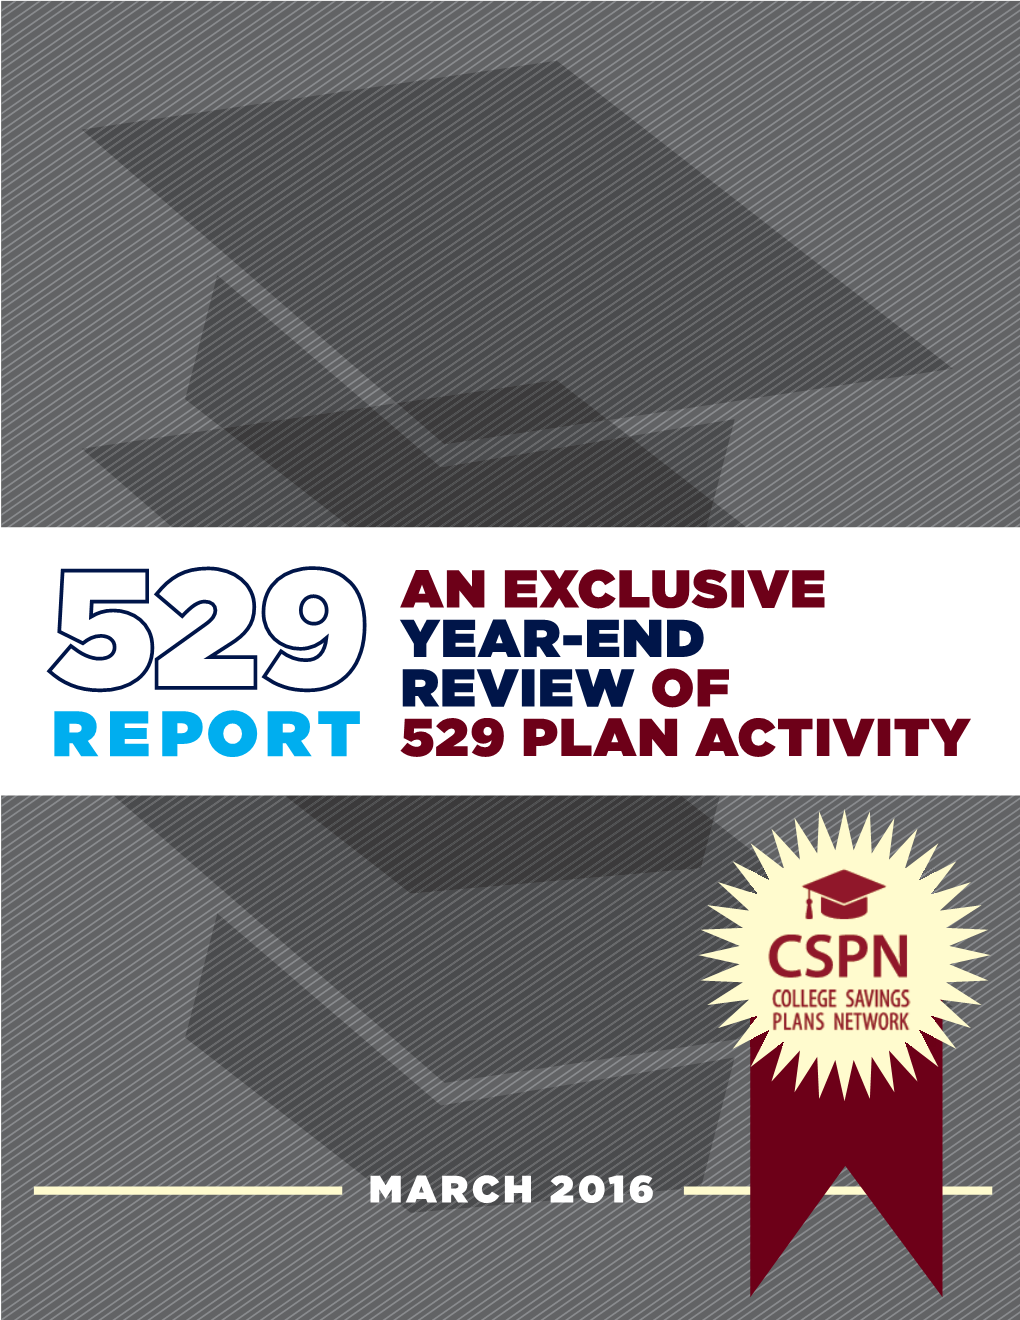 Report 529 Plan Activity